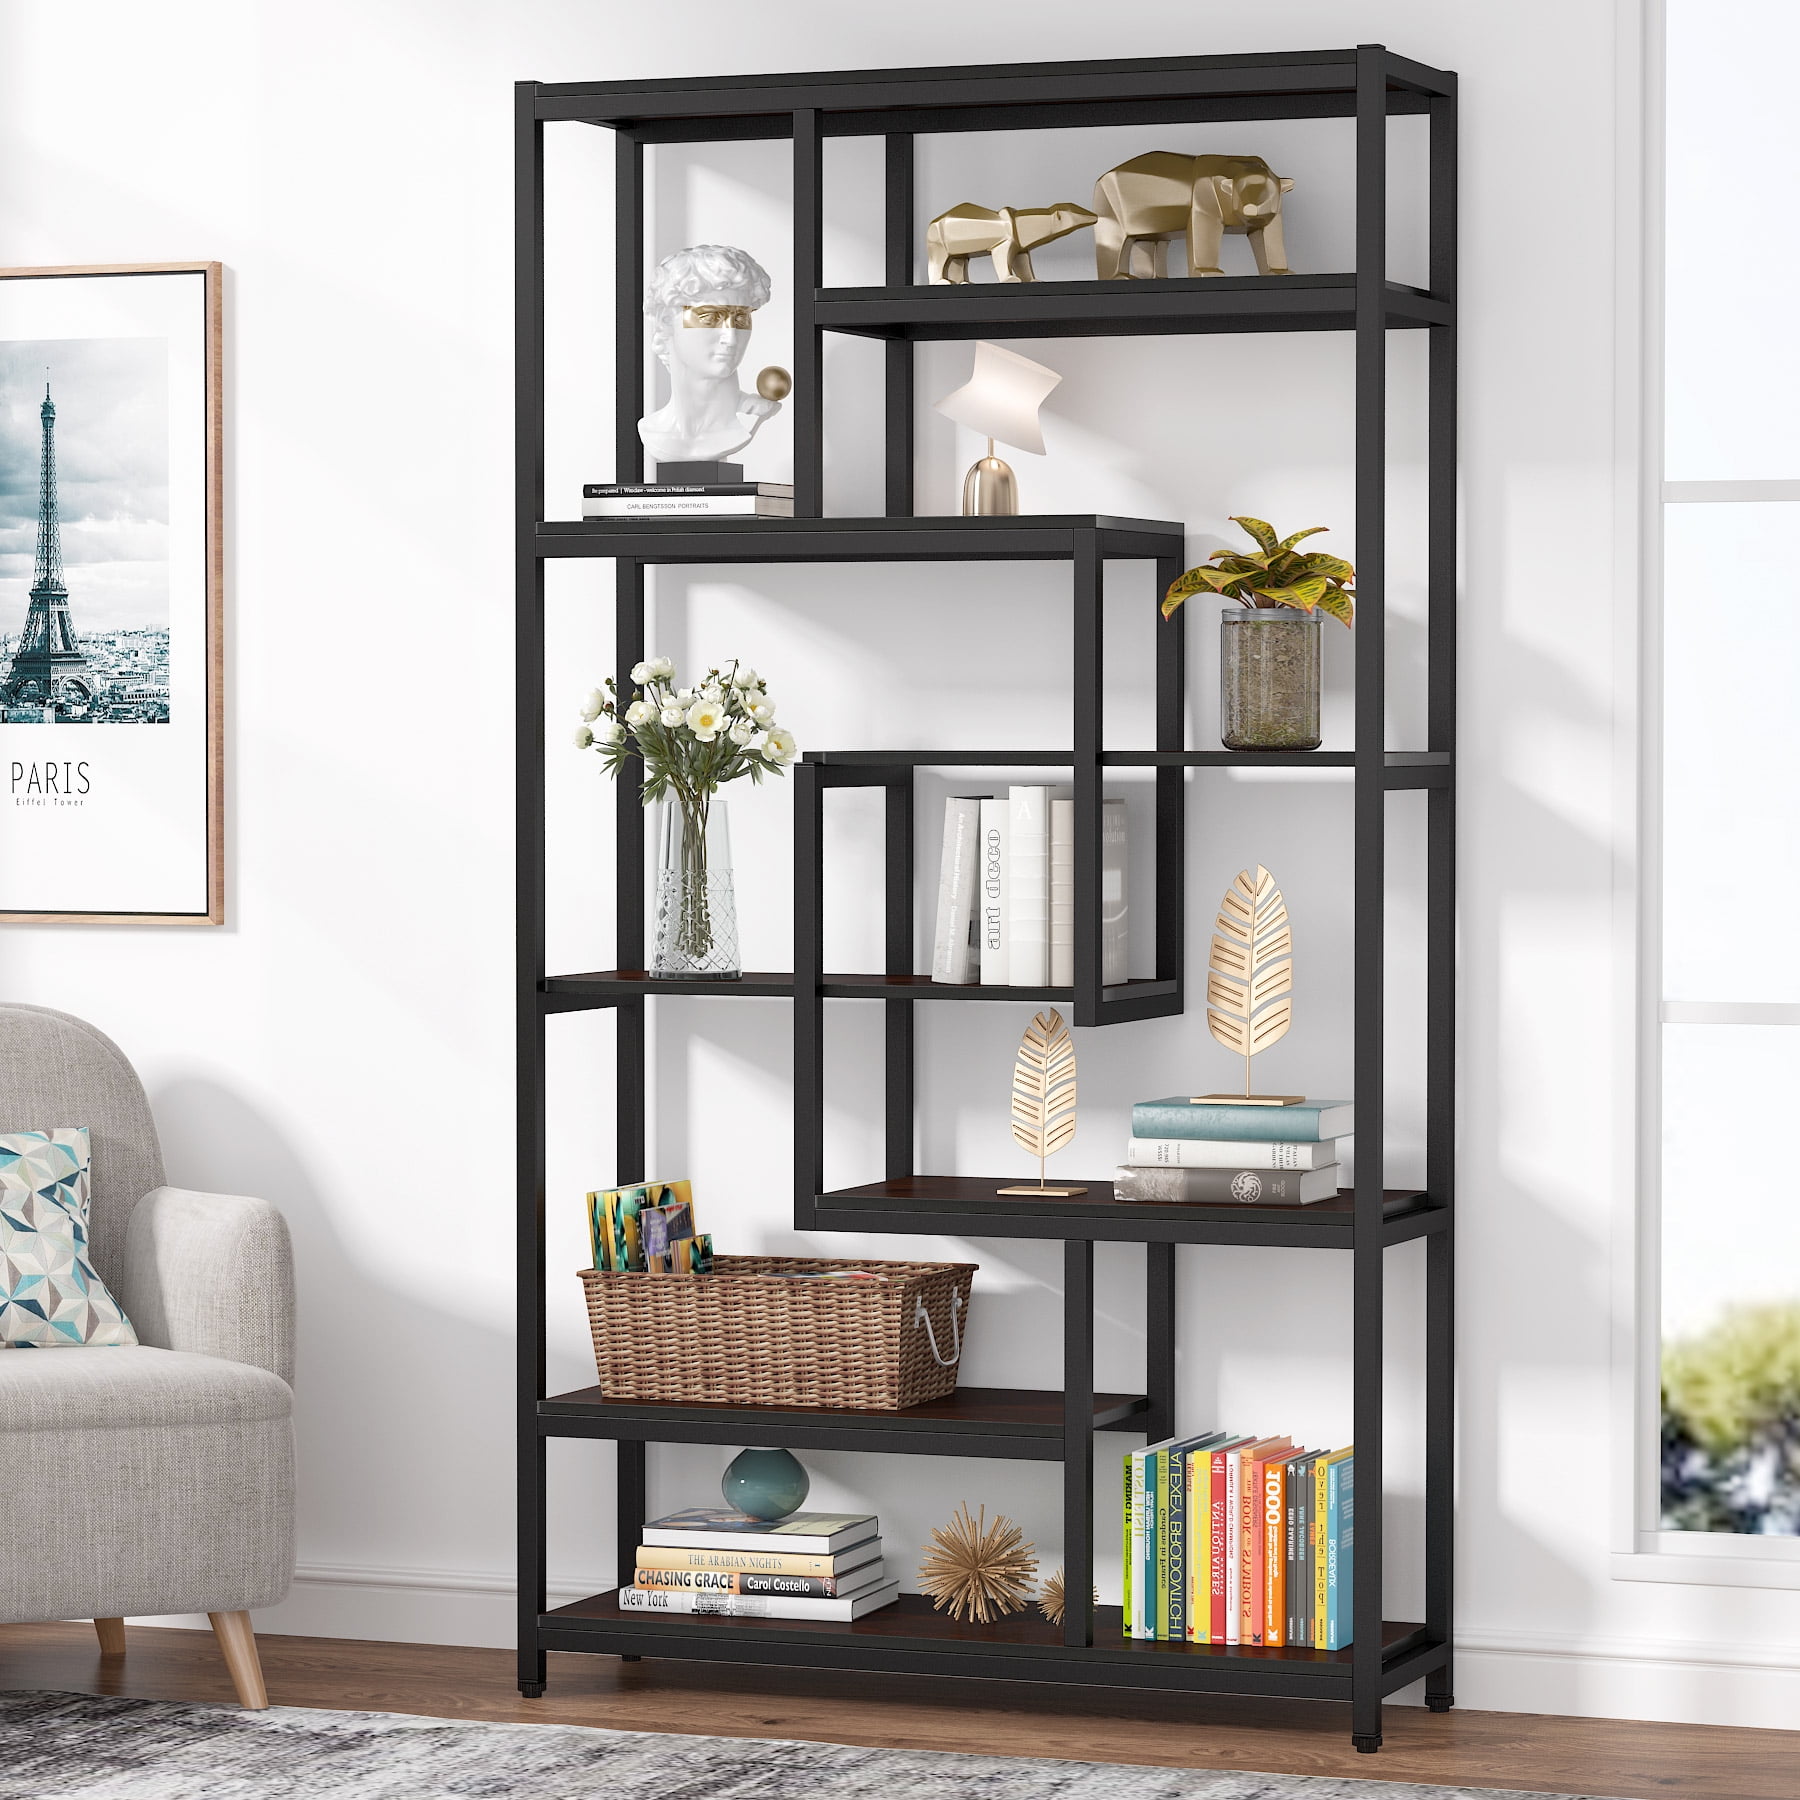 5 Cube Bookcase Bookshelves Storage Organizer Shelf Shelves Display Home Office 